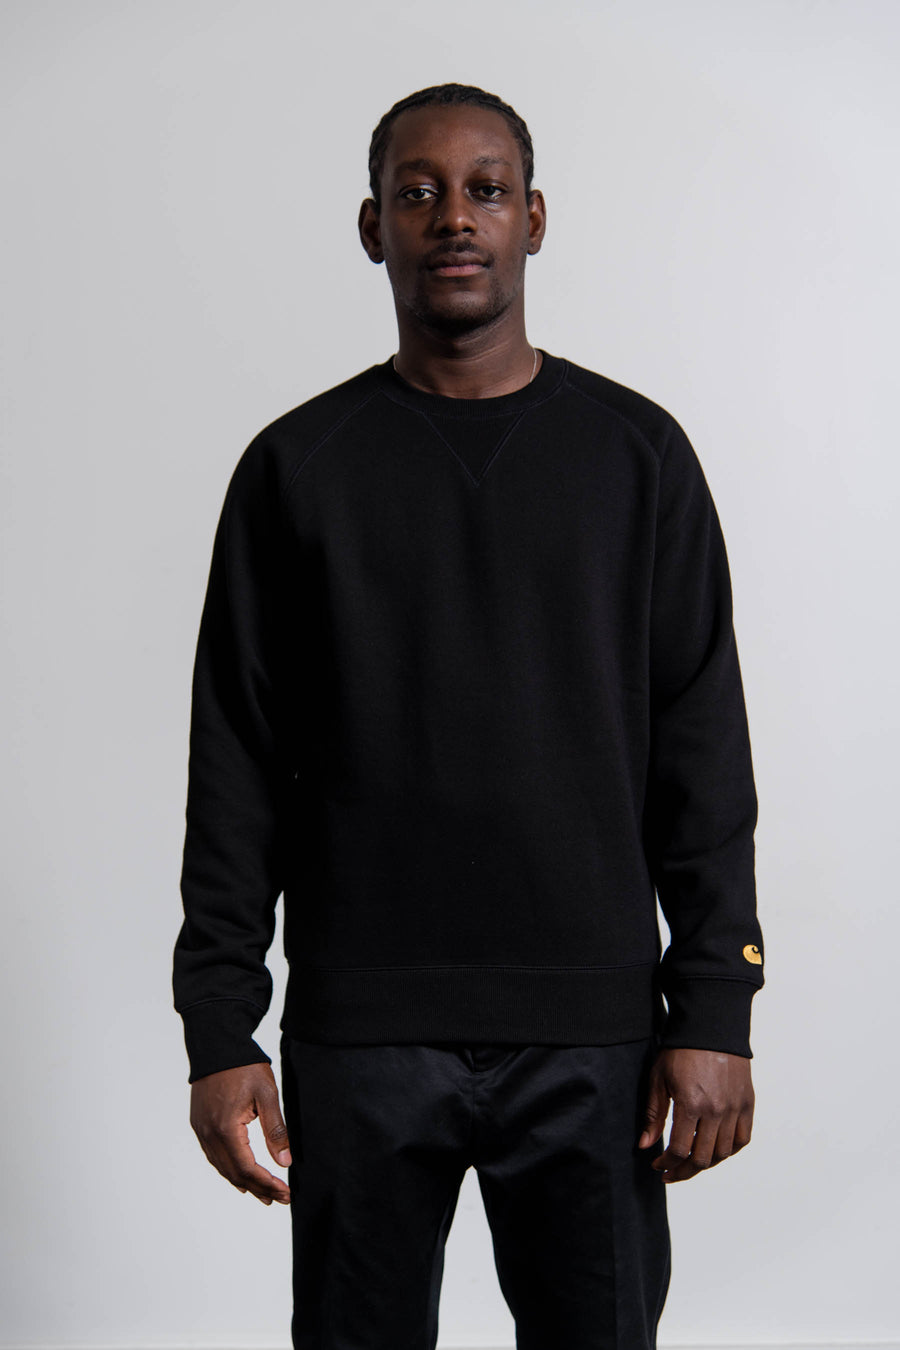 Chase Crewneck Sweater Black/Gold